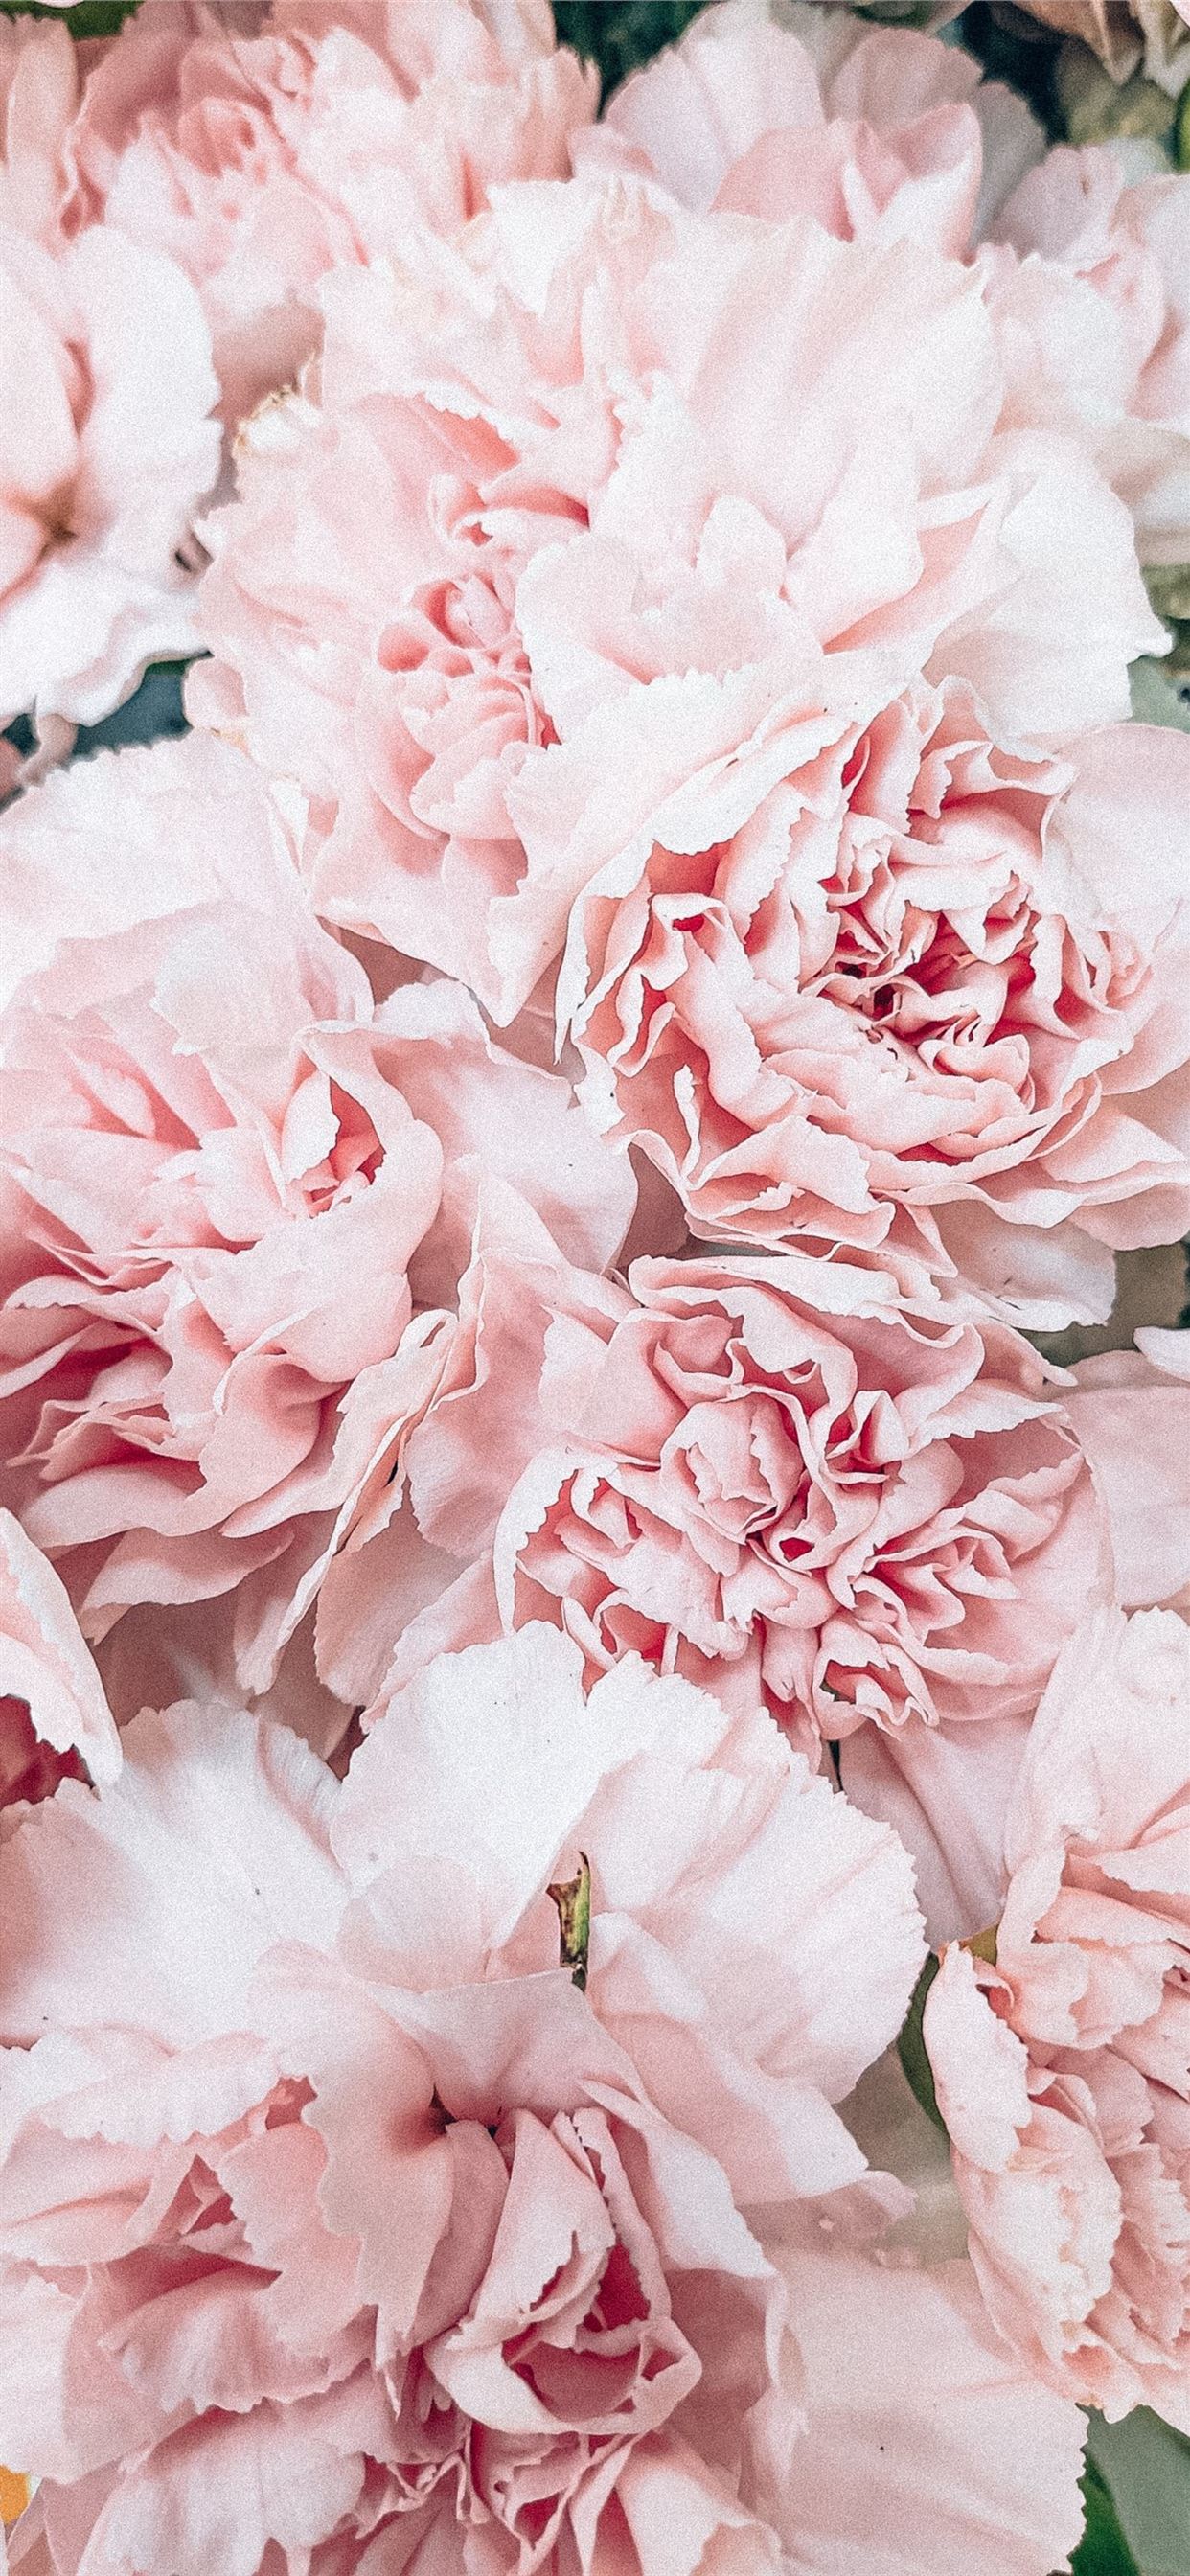 Pink Flower In Macro Lens Iphone 11 Wallpapers Free Download